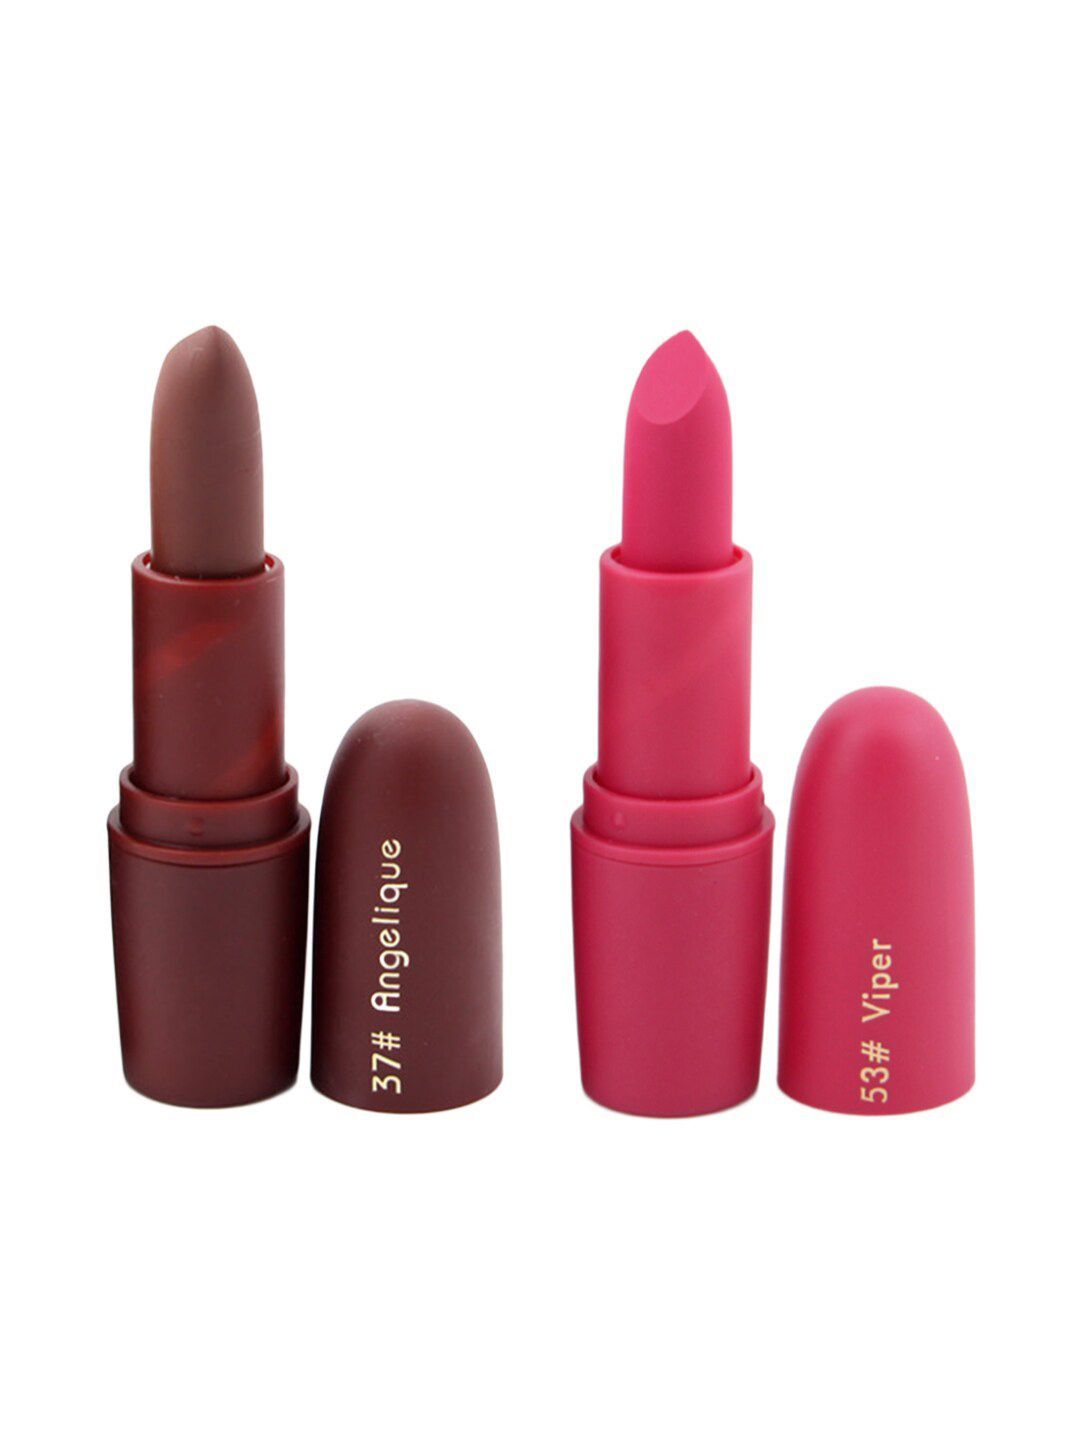 MISS ROSE Set of 2 Matte Creamy Lipsticks - Angelique 37 & Viper 53 Price in India